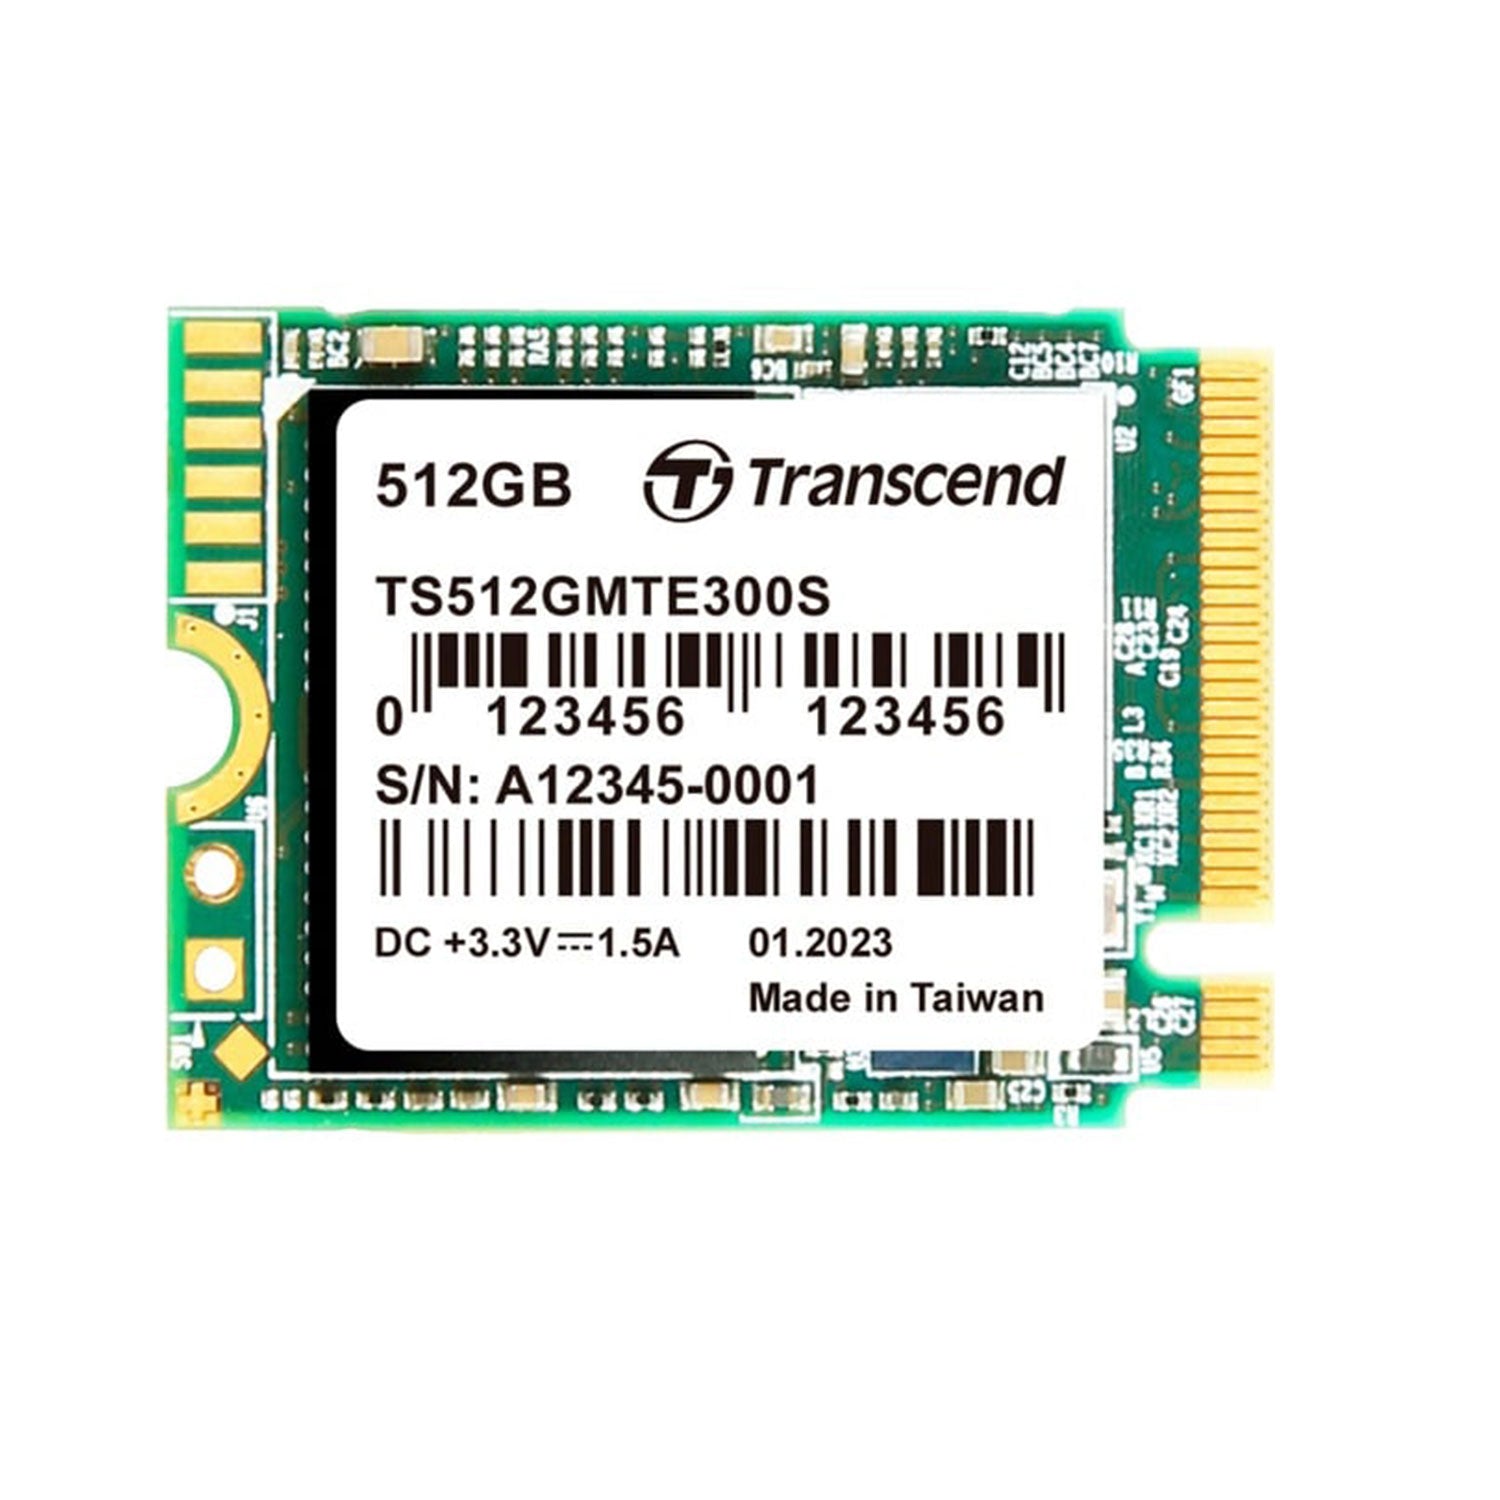 M.2 SSD 400S  SATA III M.2 SSDs - Transcend Information, Inc.